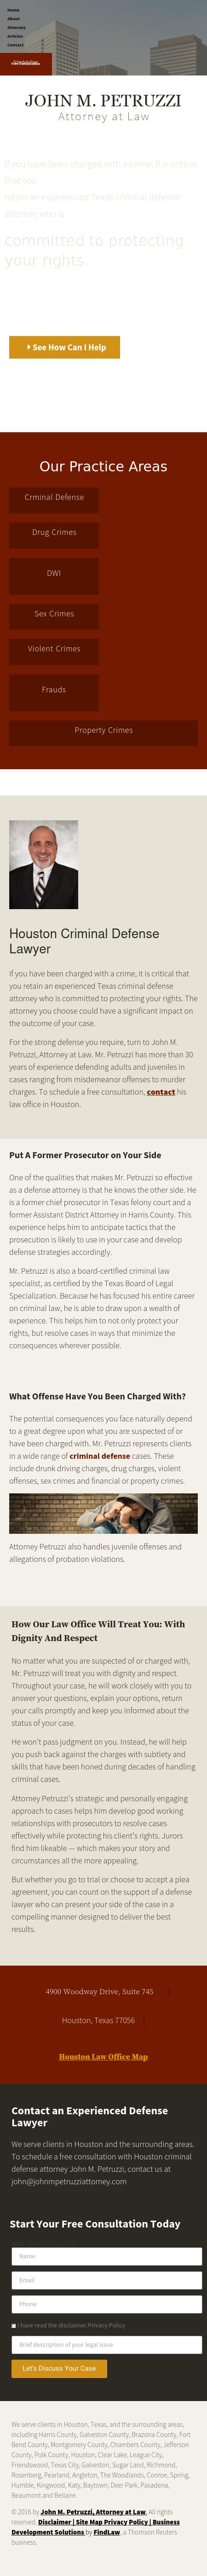 John M. Petruzzi, Attorney at Law - Houston TX Lawyers